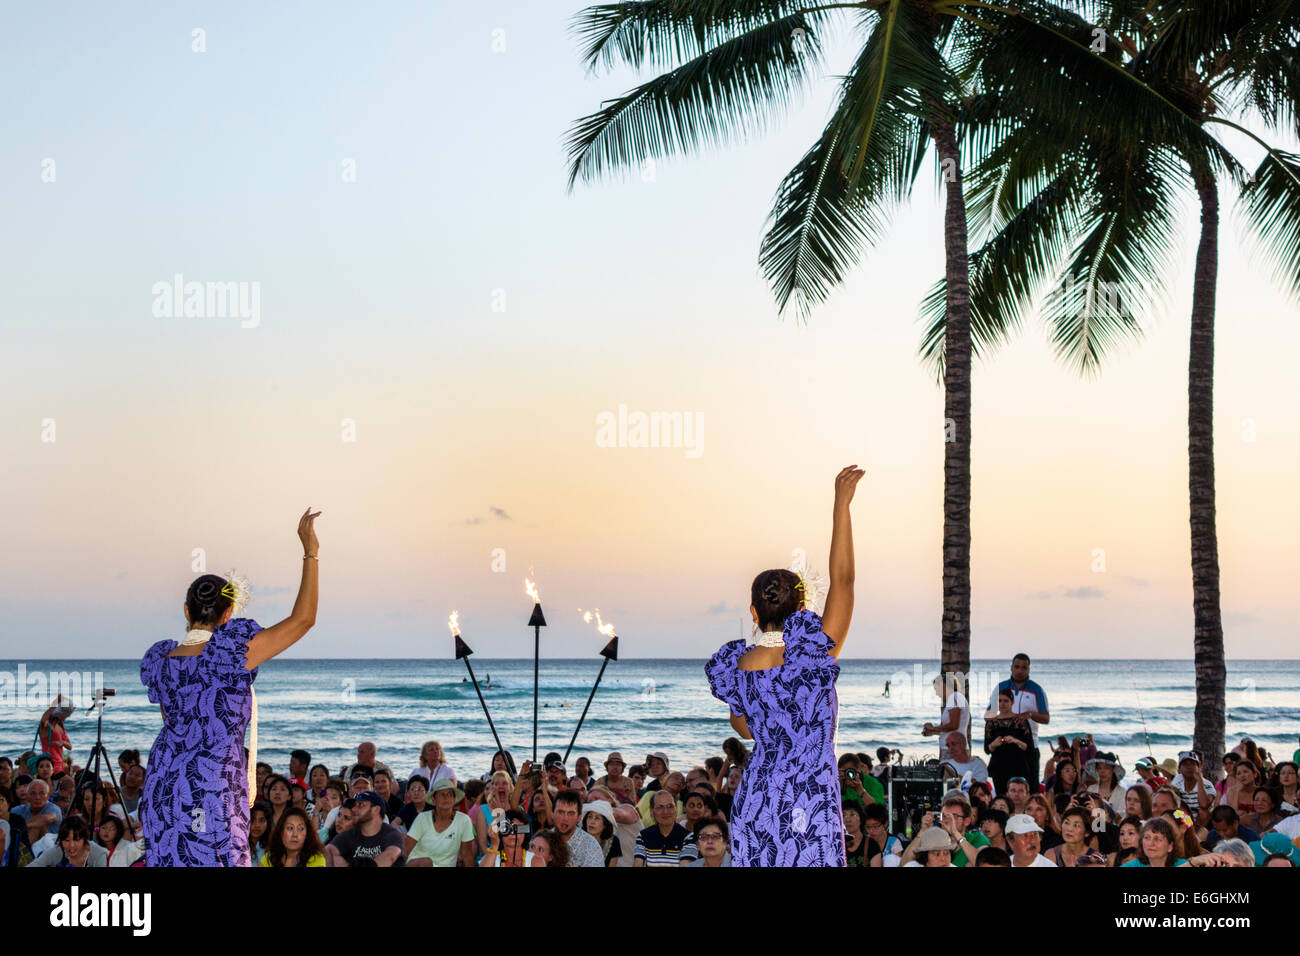 Hawaii,Hawaiian,Honolulu,Waikiki Beach,Kuhio Beach Park,Hyatt Regency Hula Show,free audience,Pacific Ocean,woman female women,dancer,torch,lit,USA,US Stock Photo